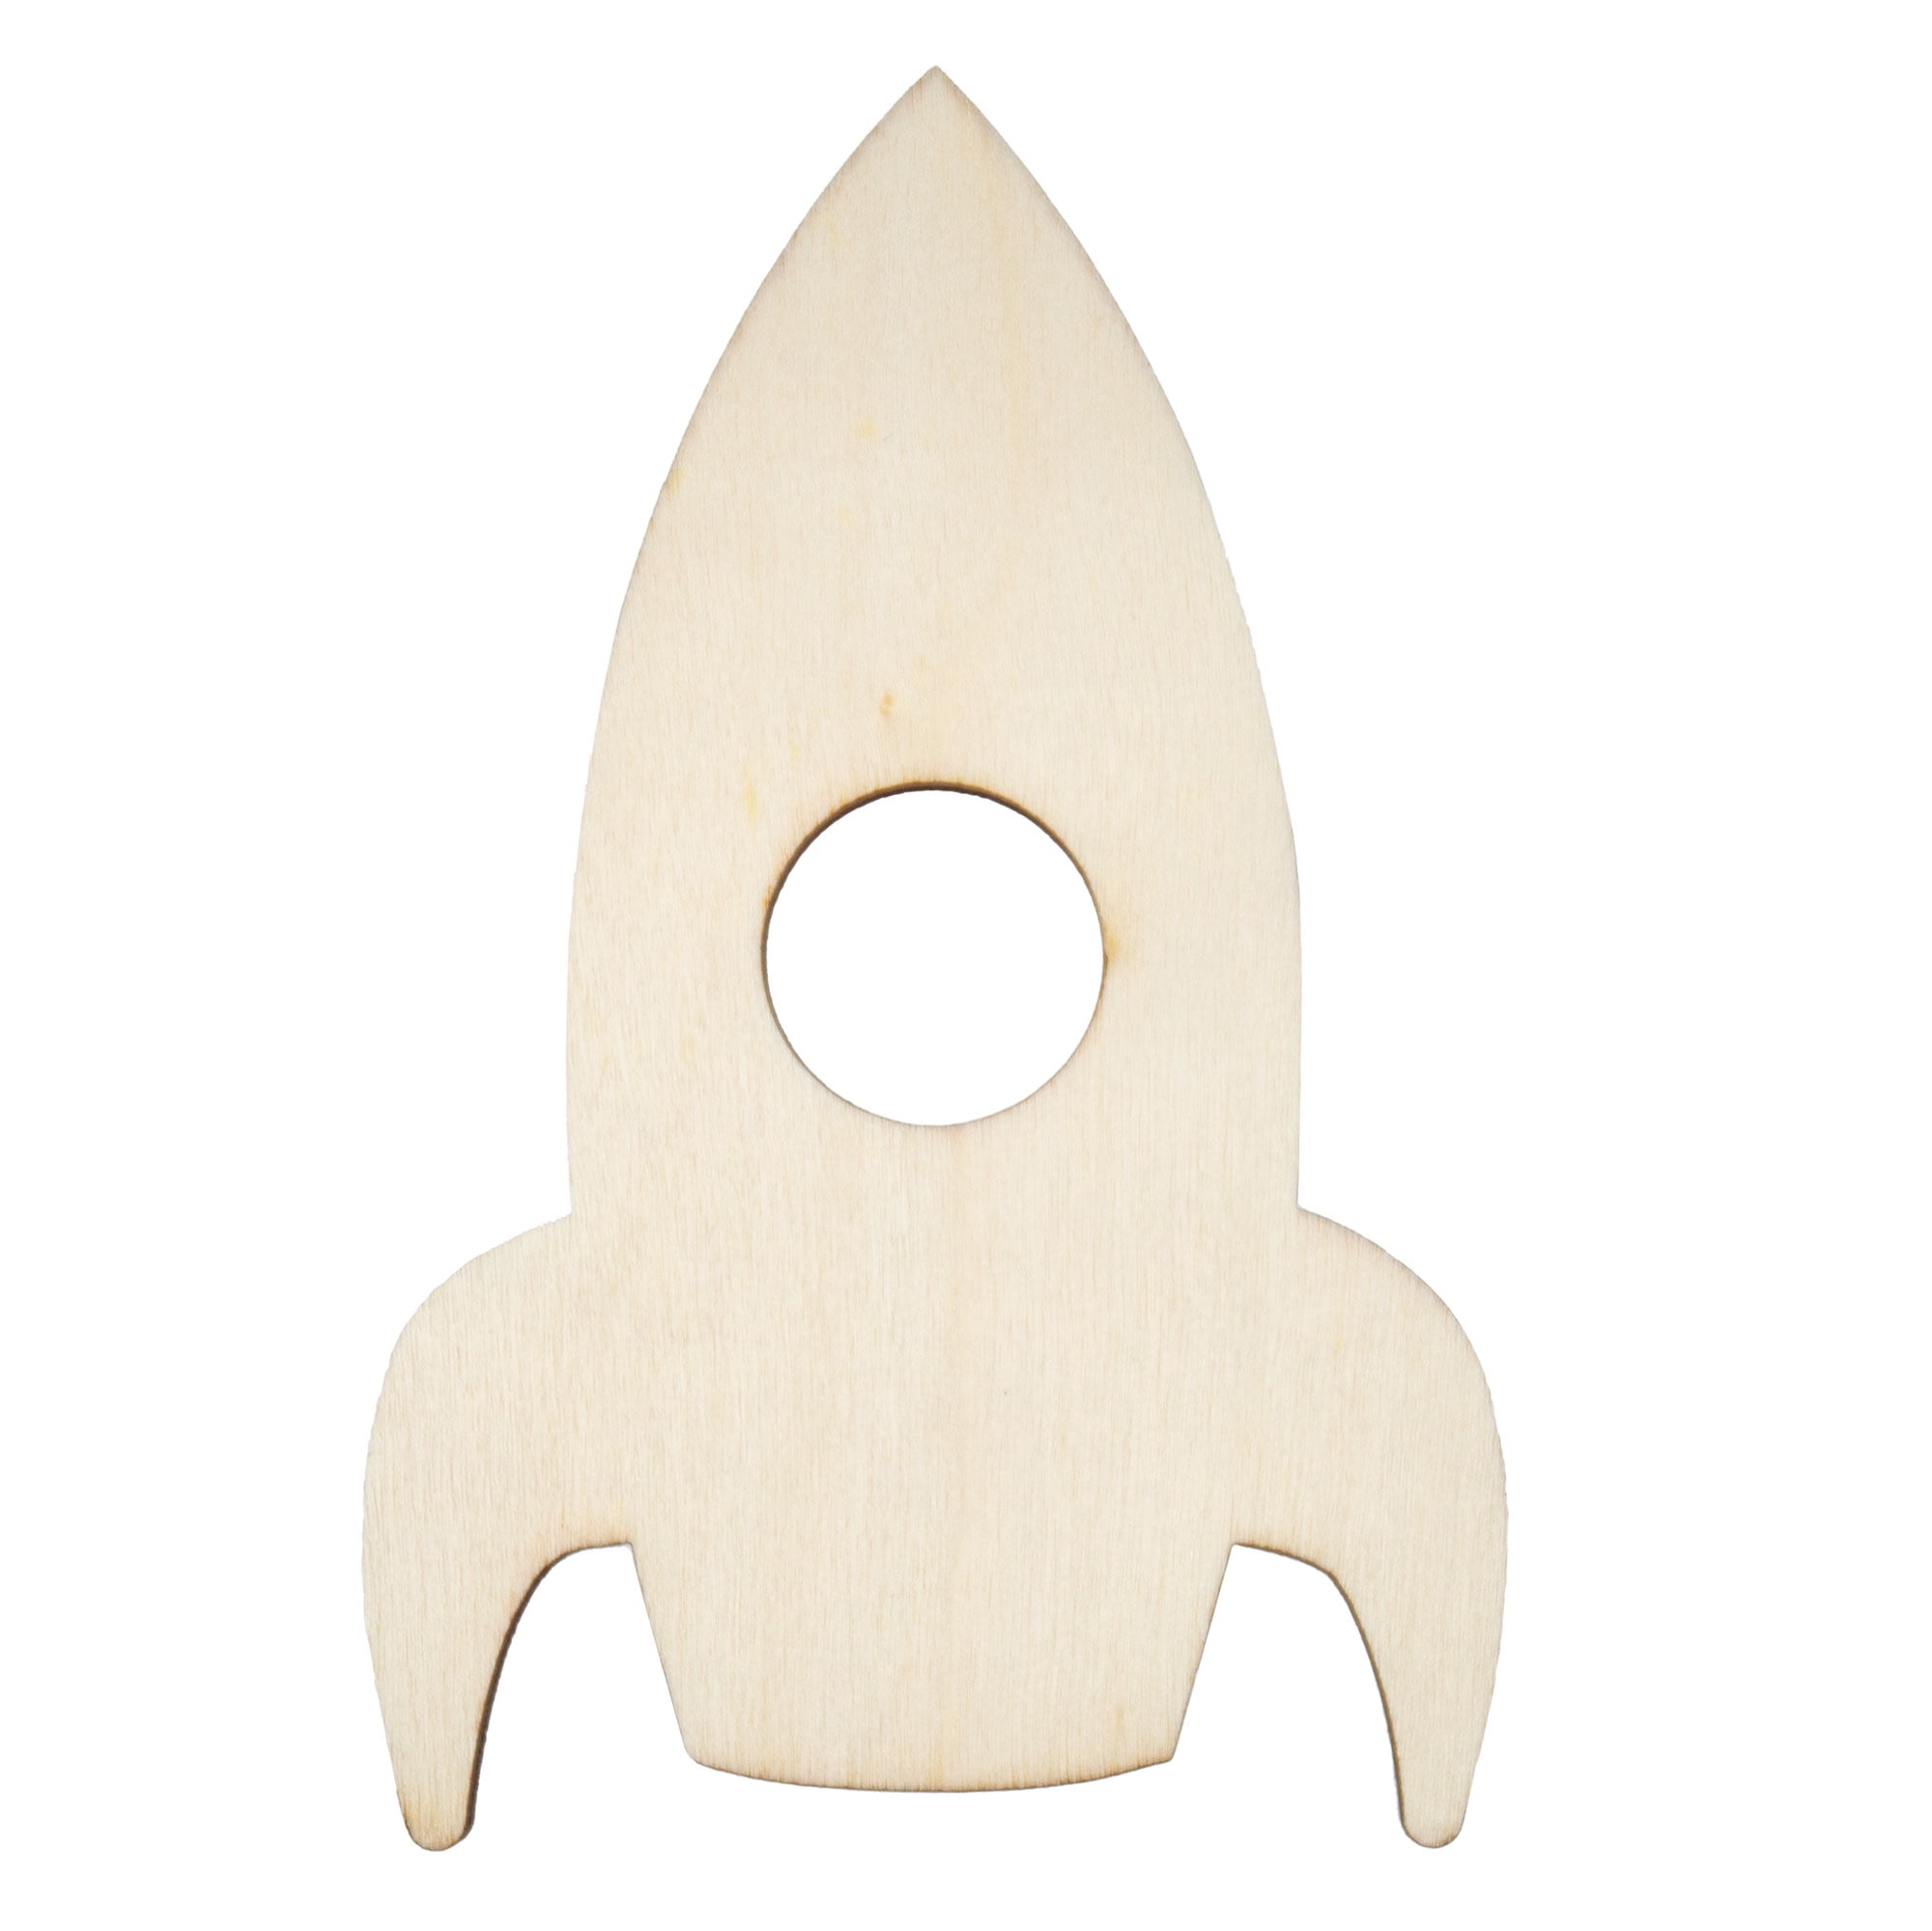 Hello Hobby Wood Rocket Shape, Ready-to-Decorate Die-Cut Shape, 2.5” x 4”